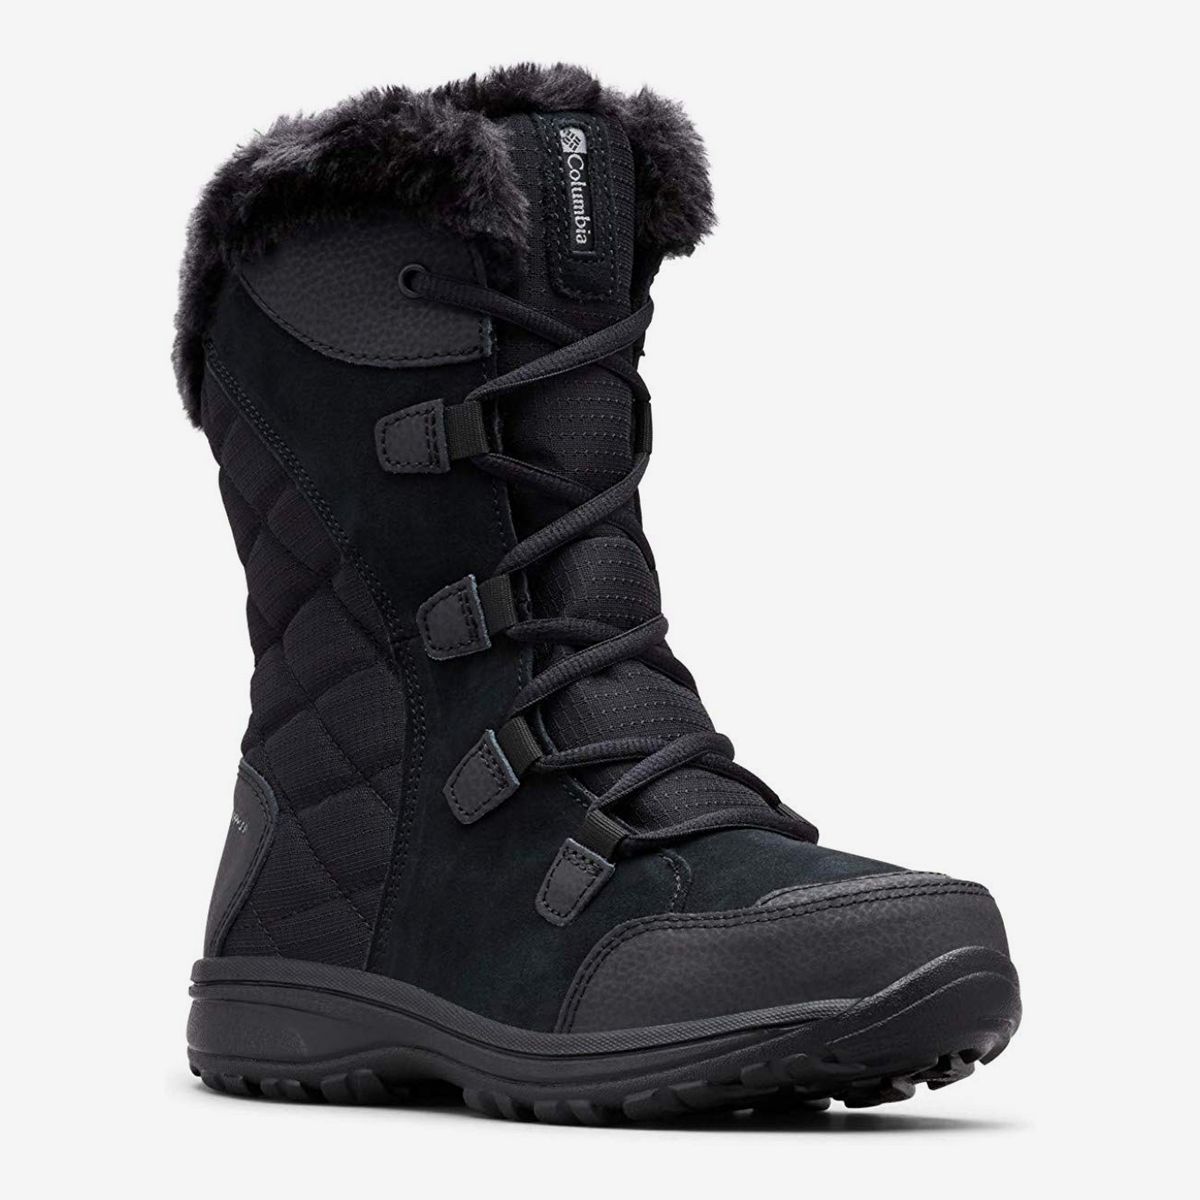 soft winter boots ladies